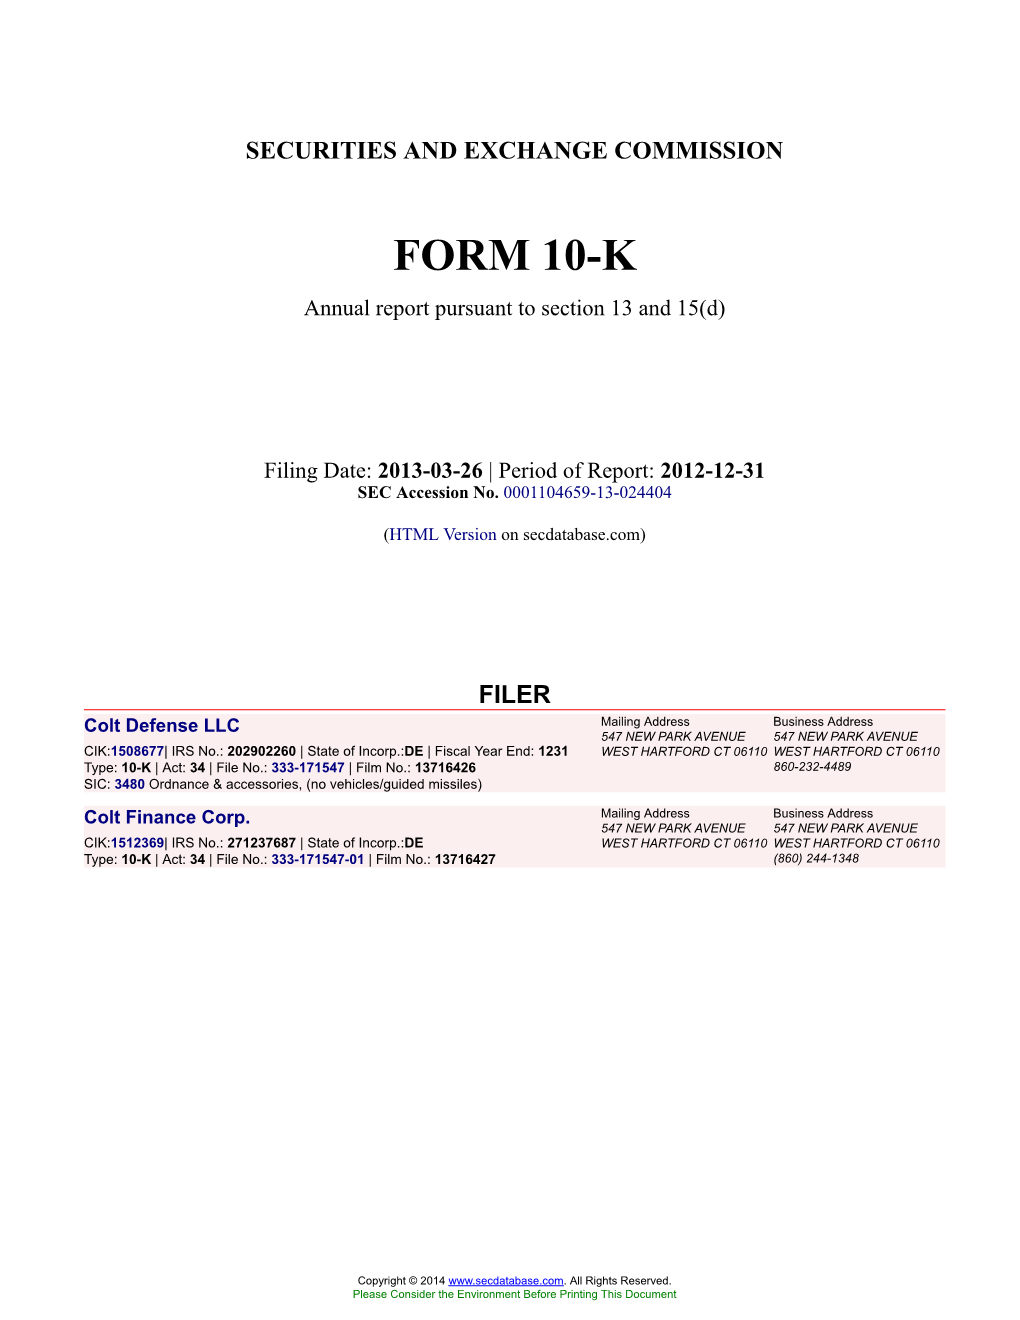 Colt Defense LLC Form 10-K Annual Report Filed 2013-03-26